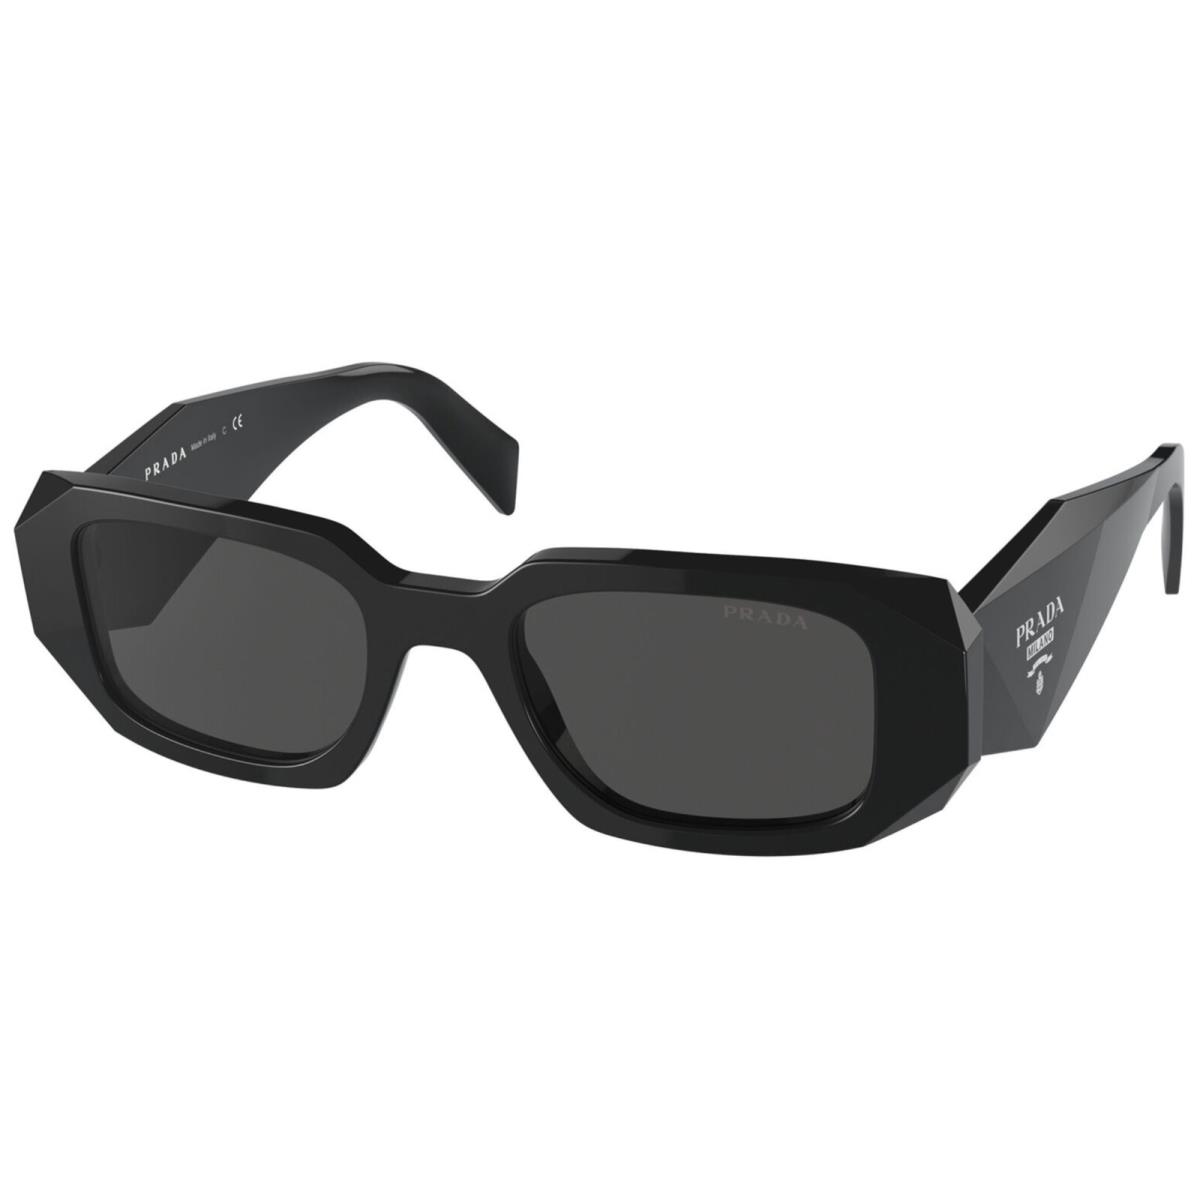 Prada Sunglasses PR 17WS Women Sunglasses Black/dark Grey 49mm